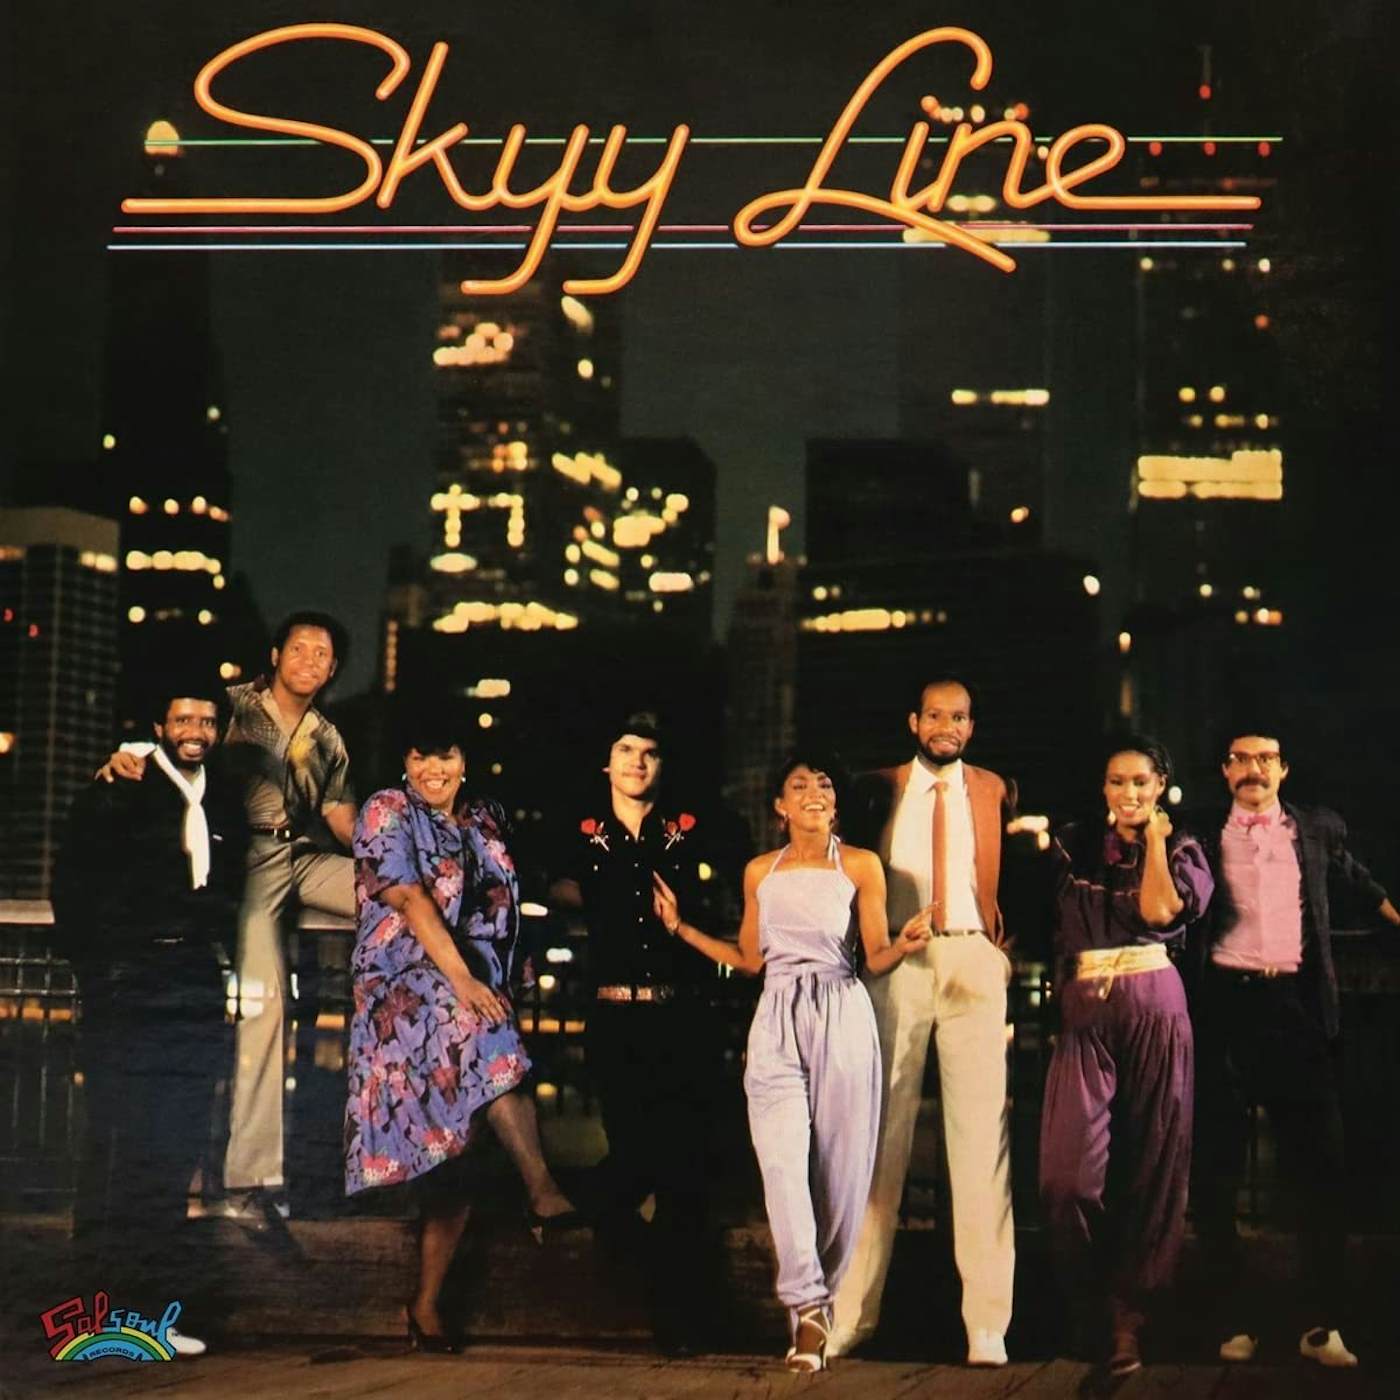  Skyy Line Vinyl Record